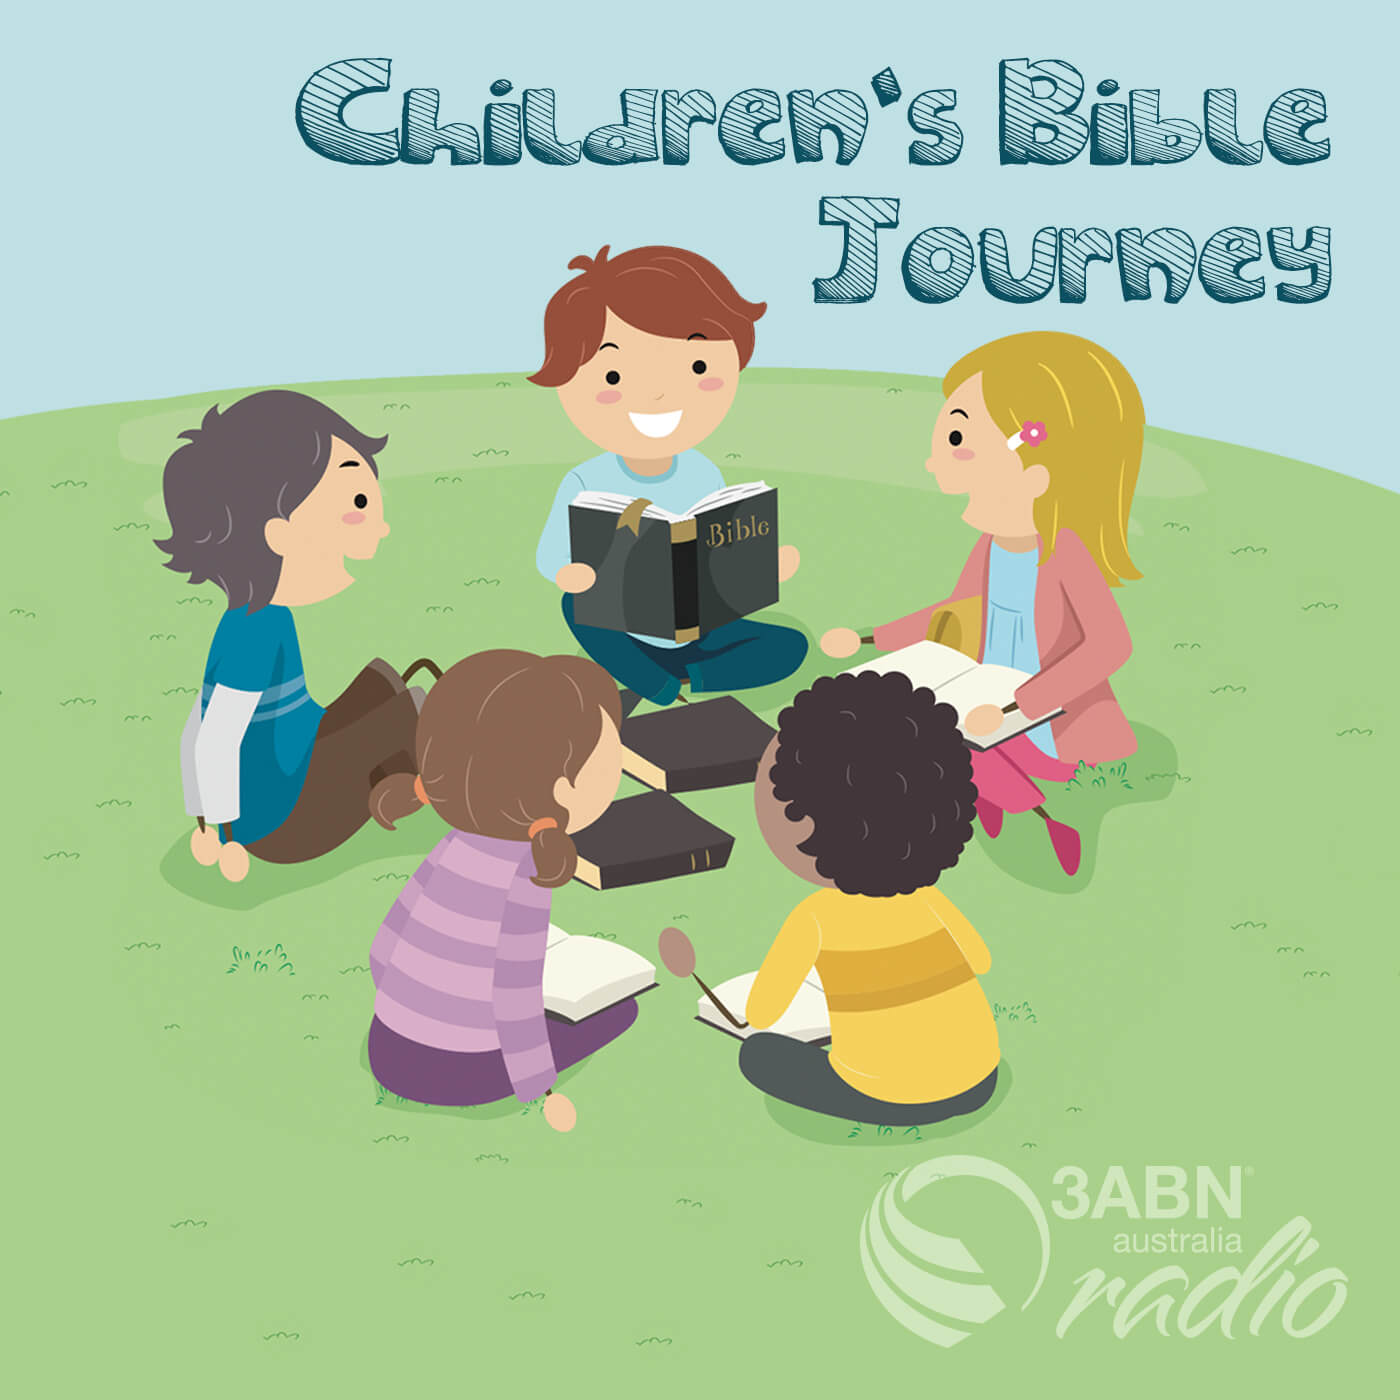 Children’s Bible Journey - 2211